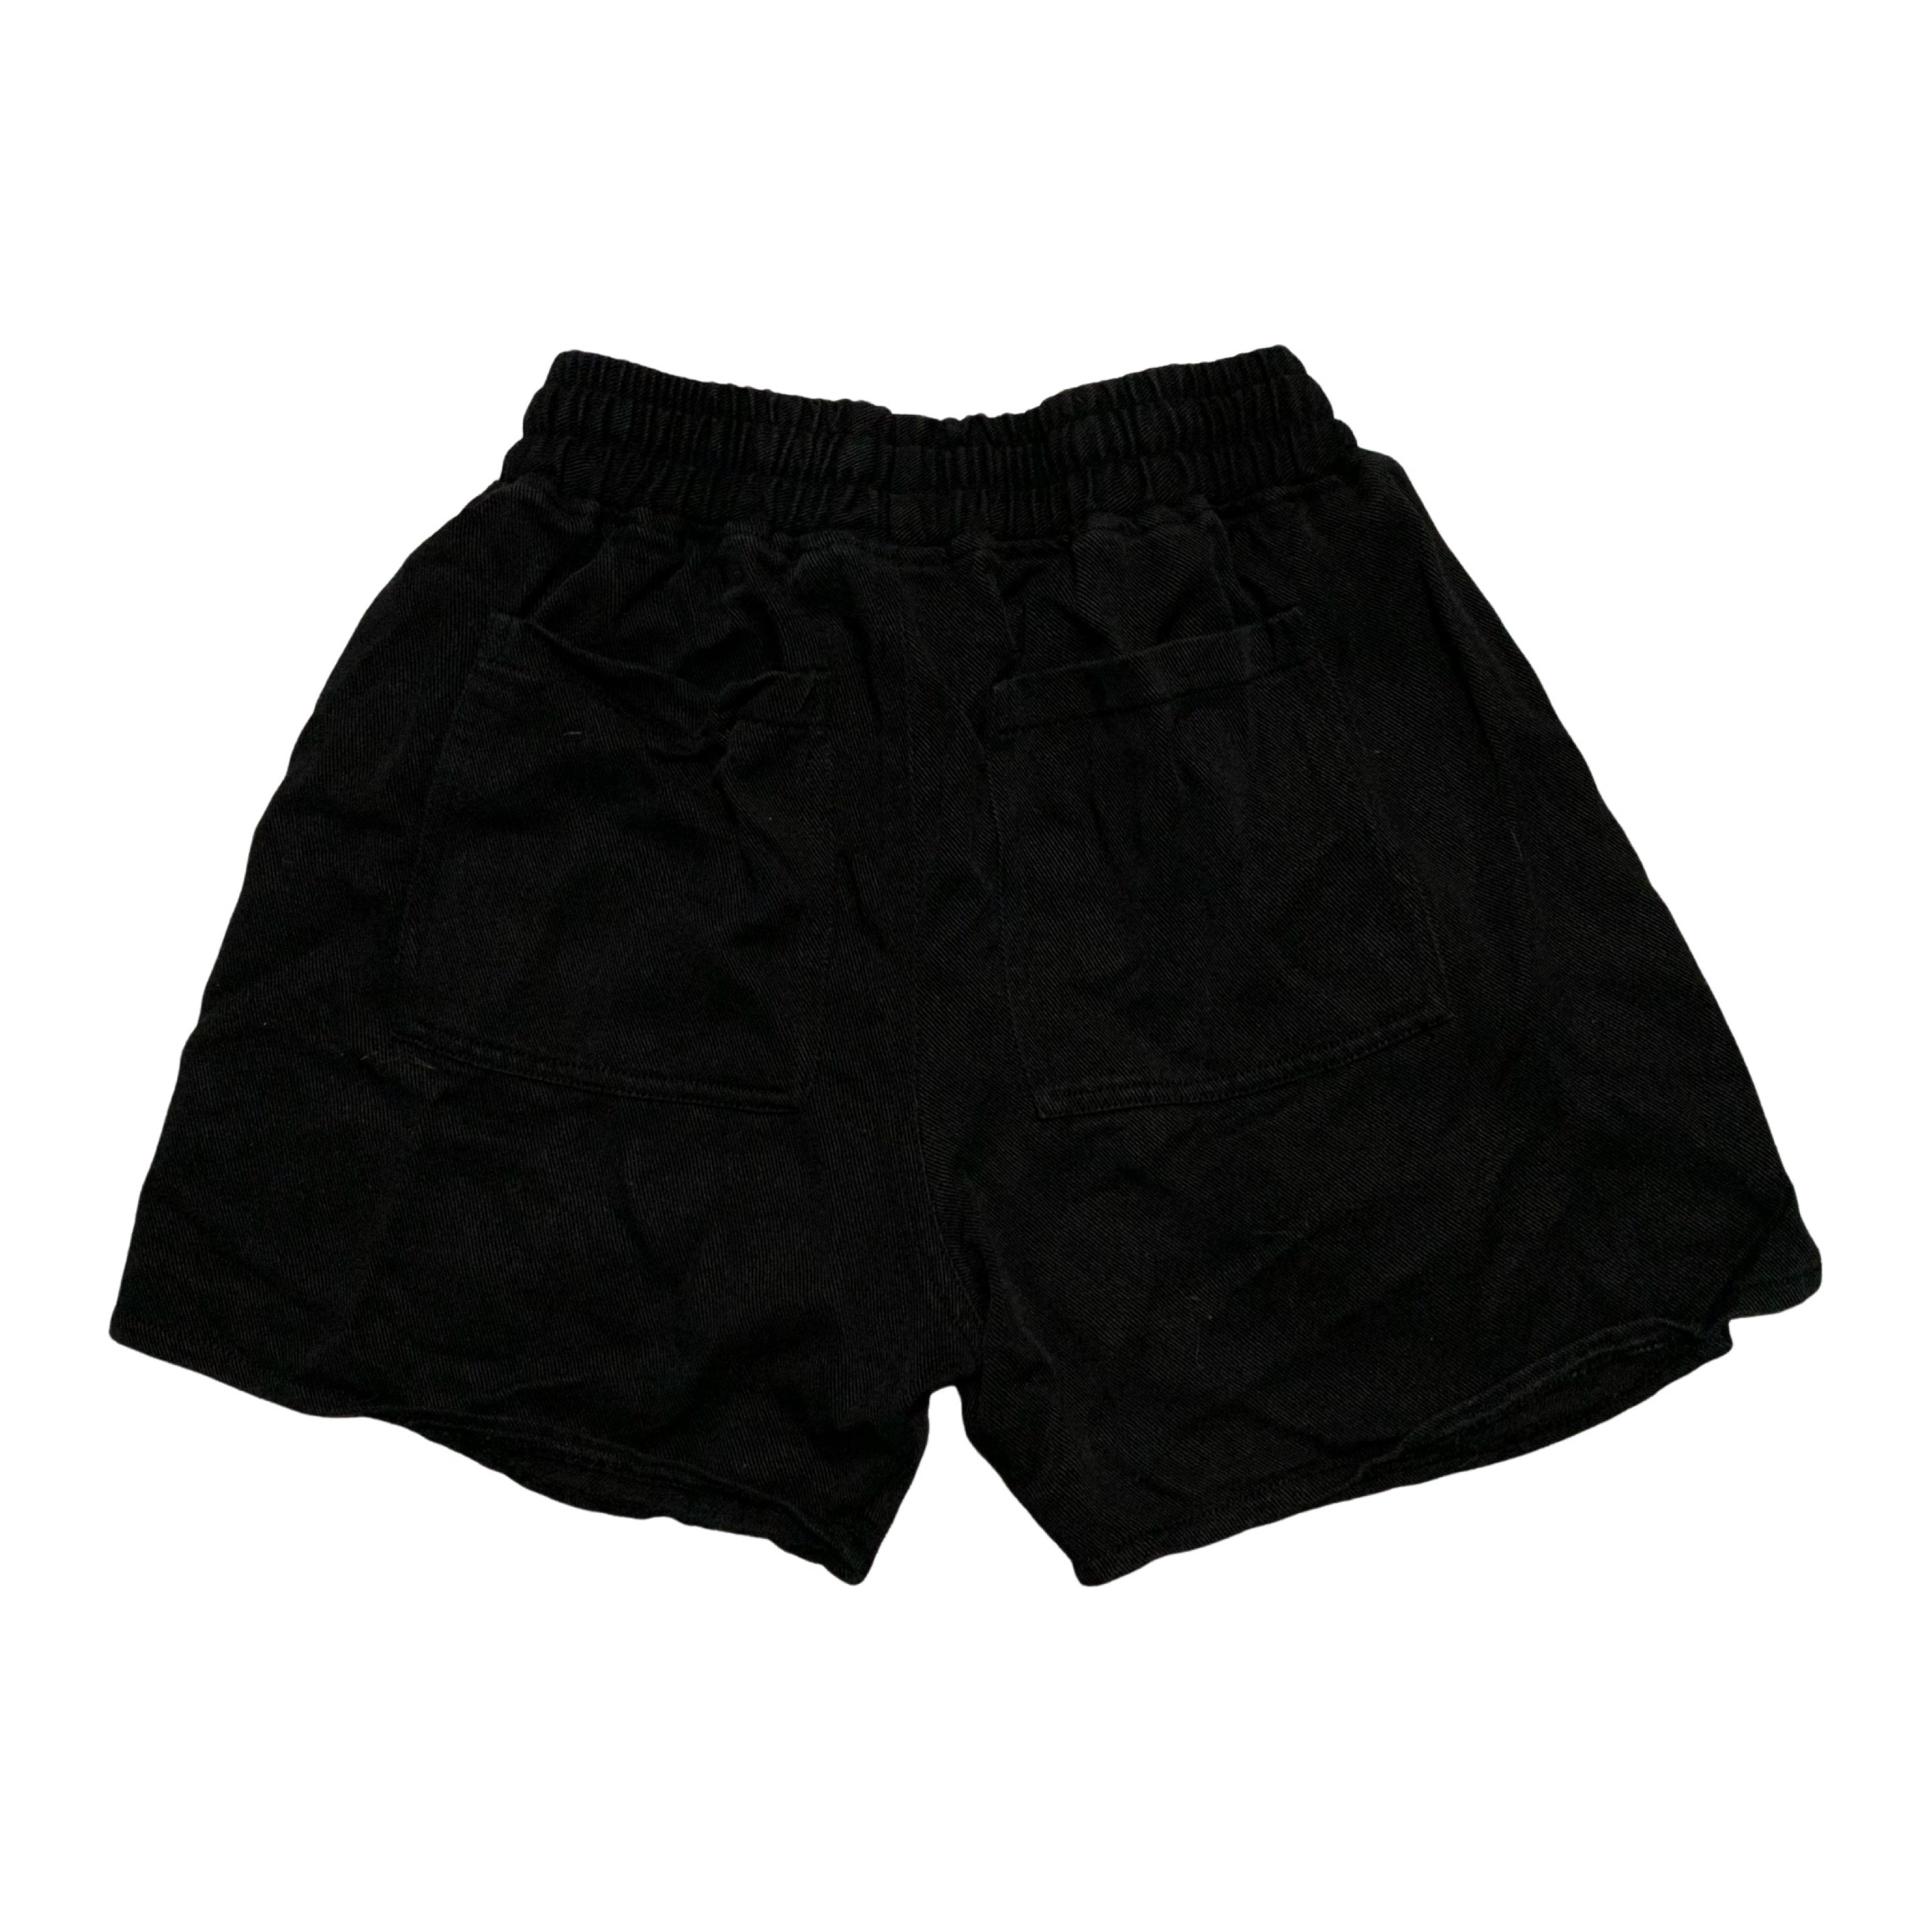 Represent Small Shorts Vintage Black Yacht Bottoms